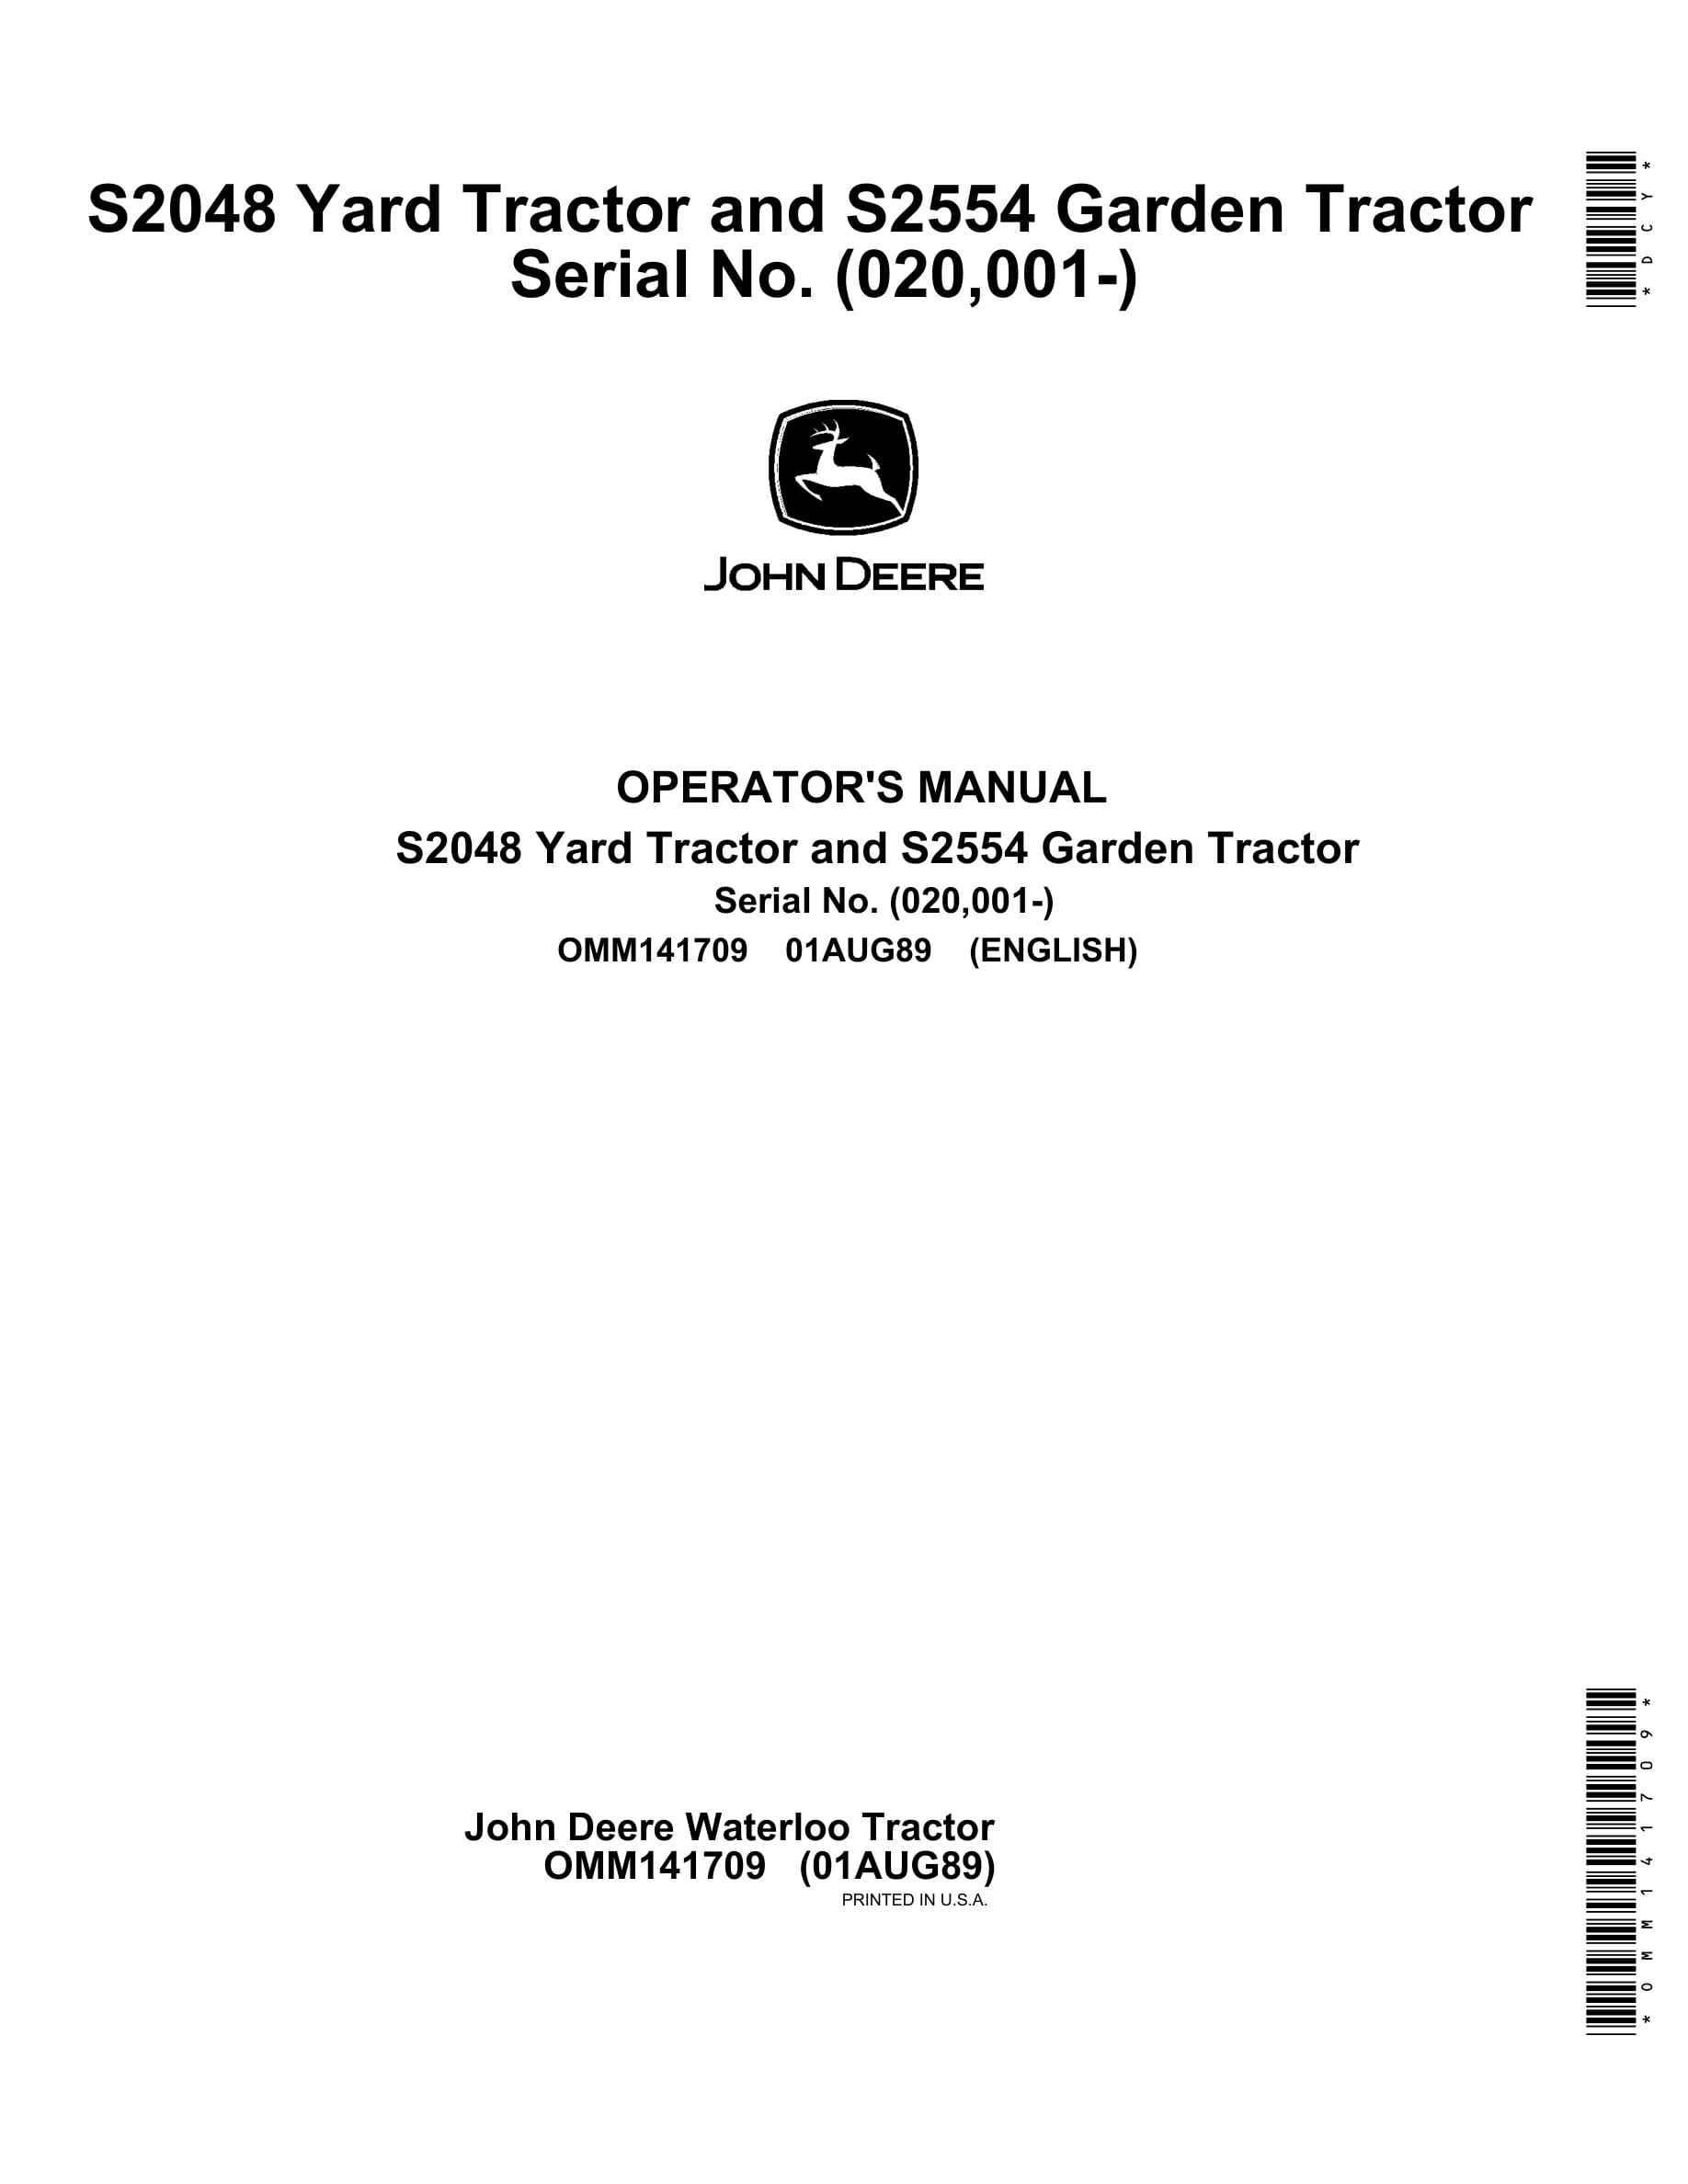 John Deere S2048 S2554 Tractor Operator Manual OMM141709-1